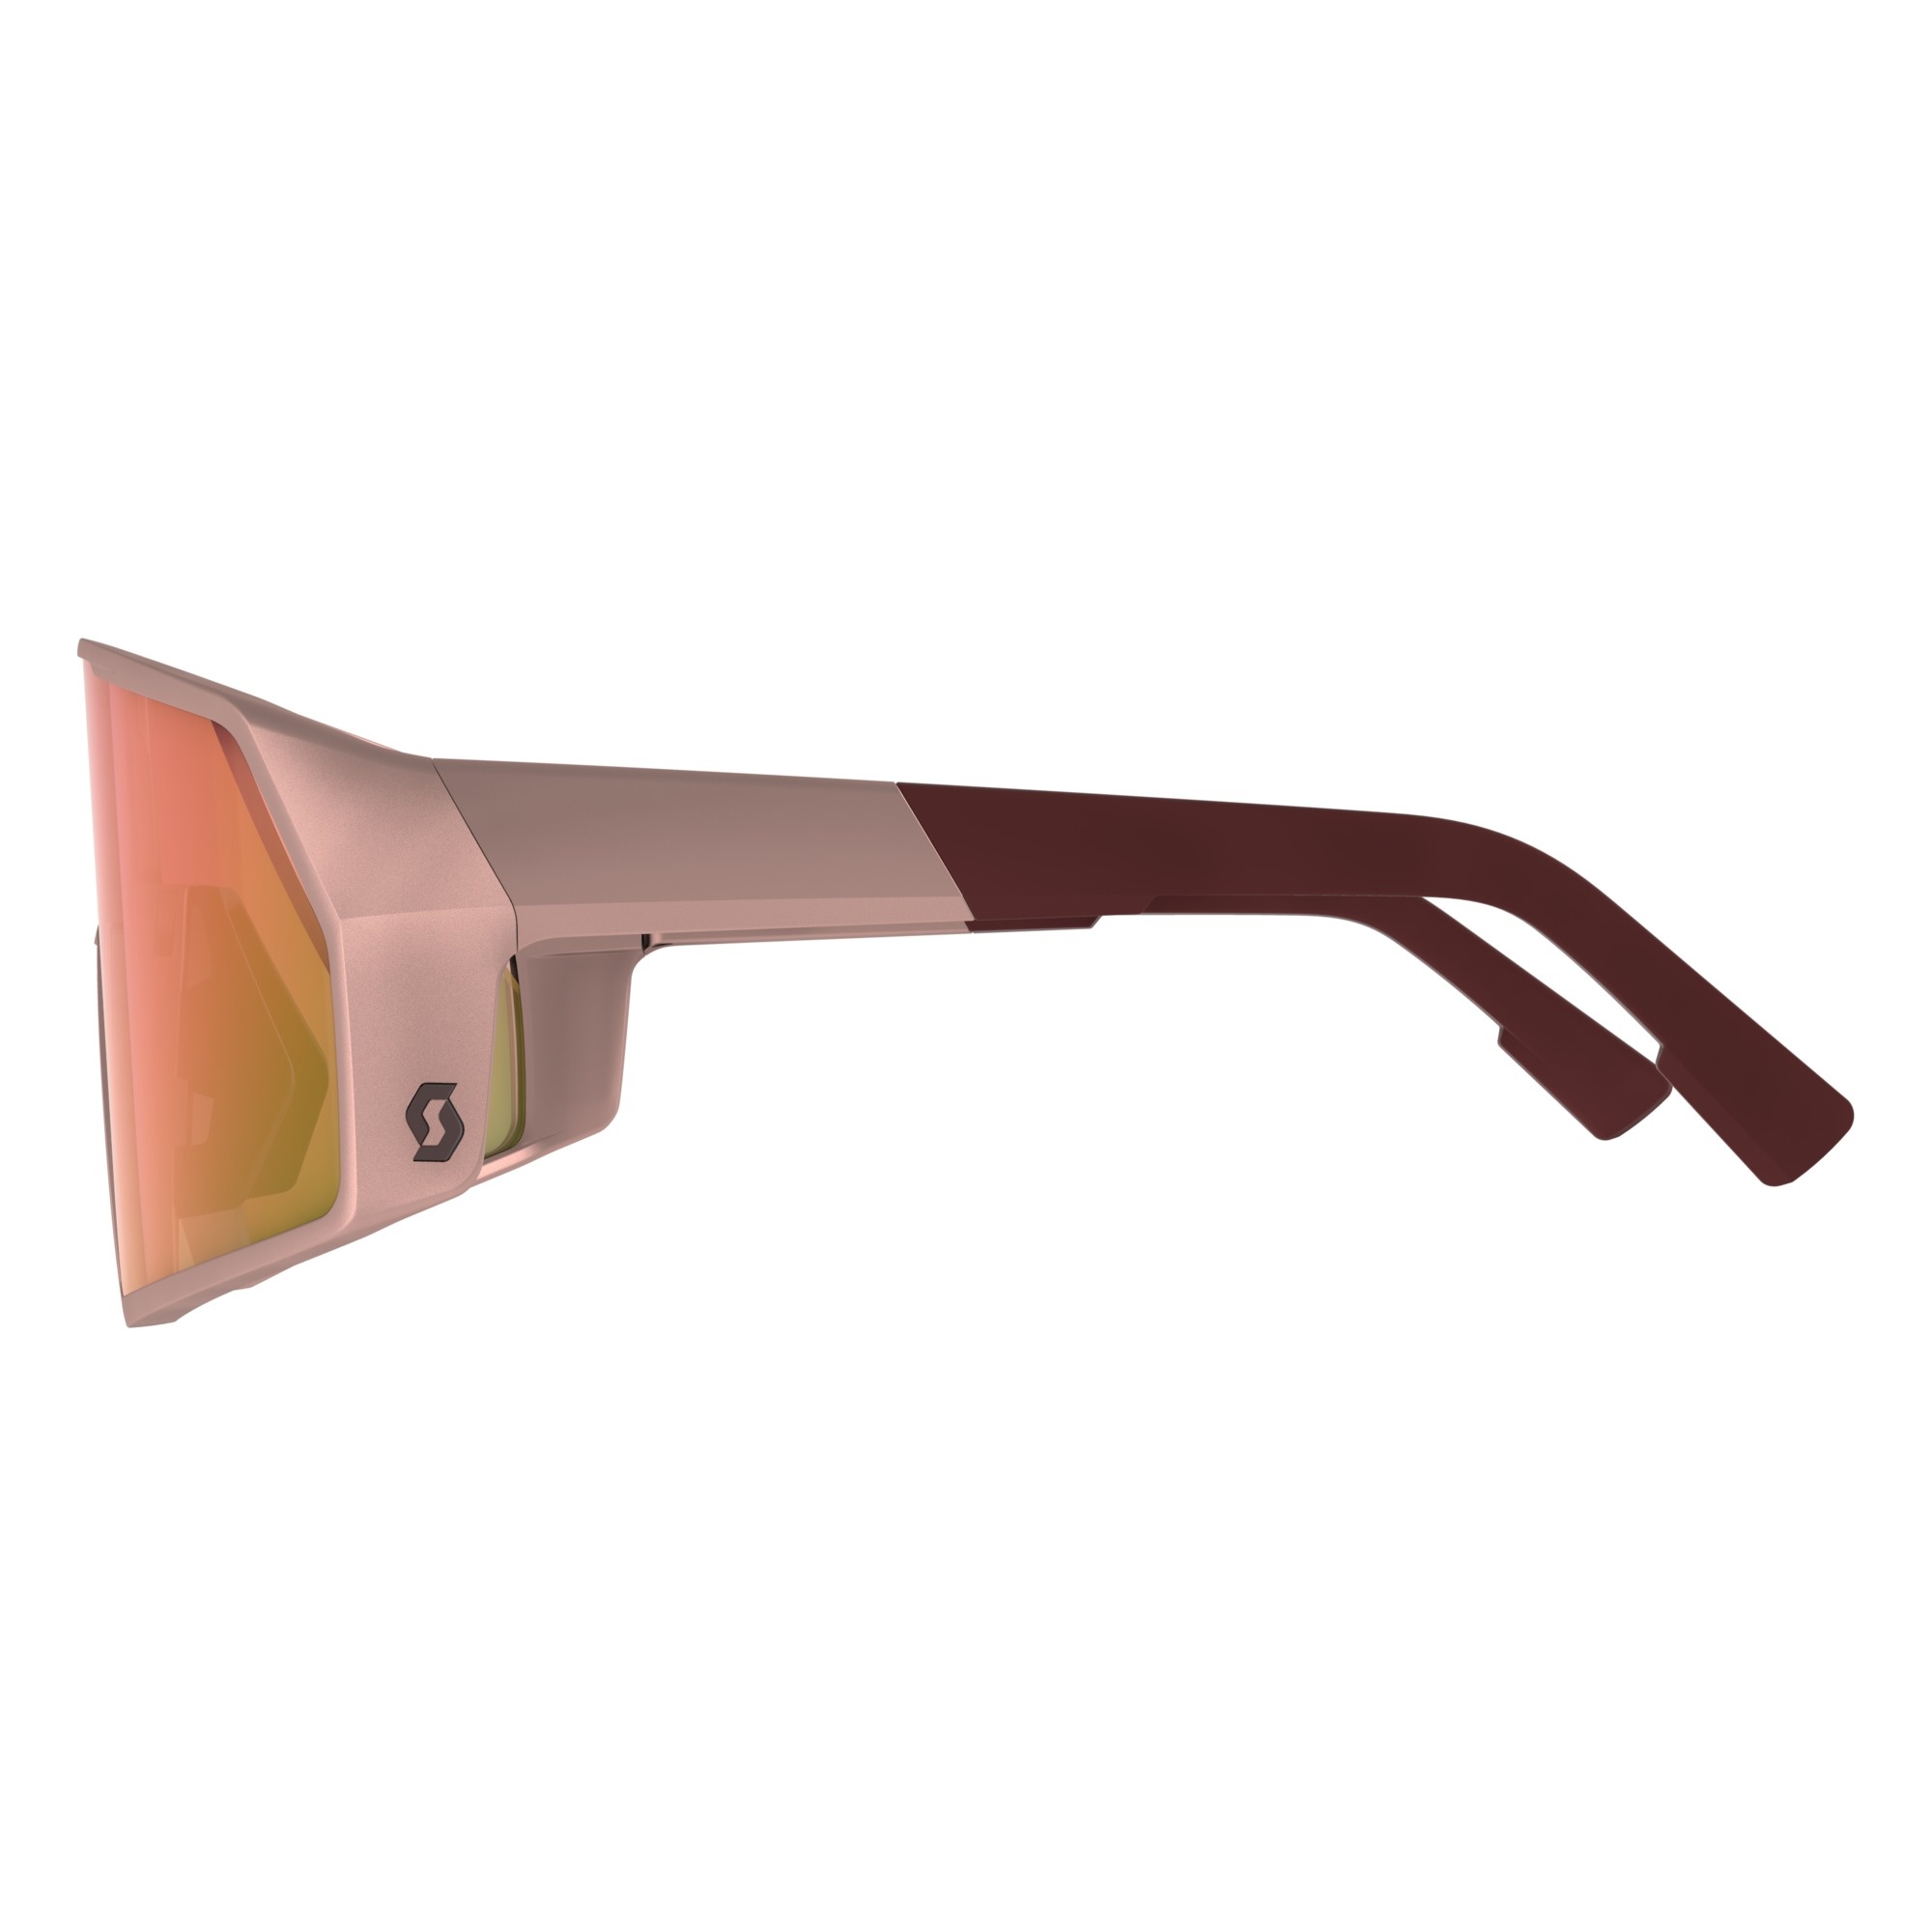 Beklædning - Cykelbriller - Scott Pro Shield Cykelbrille - Lyserød